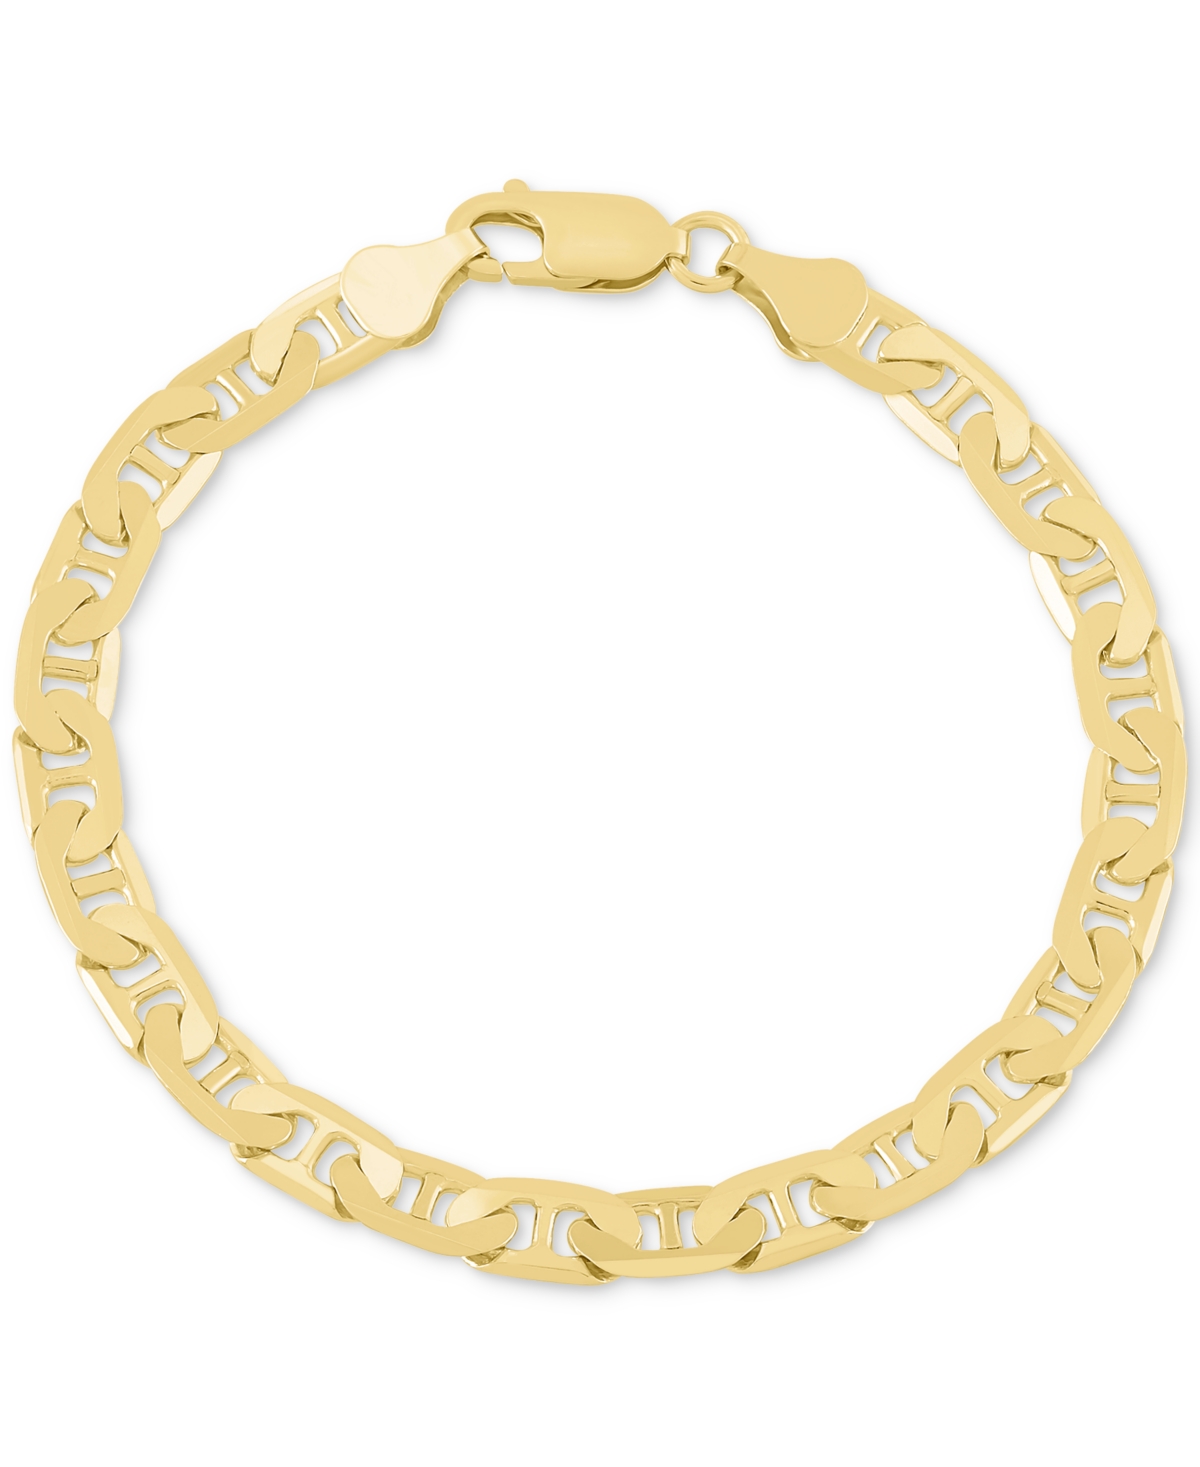 Men's Italian Silver Polished Mariner Link Chain Bracelet - Gold Over Silver